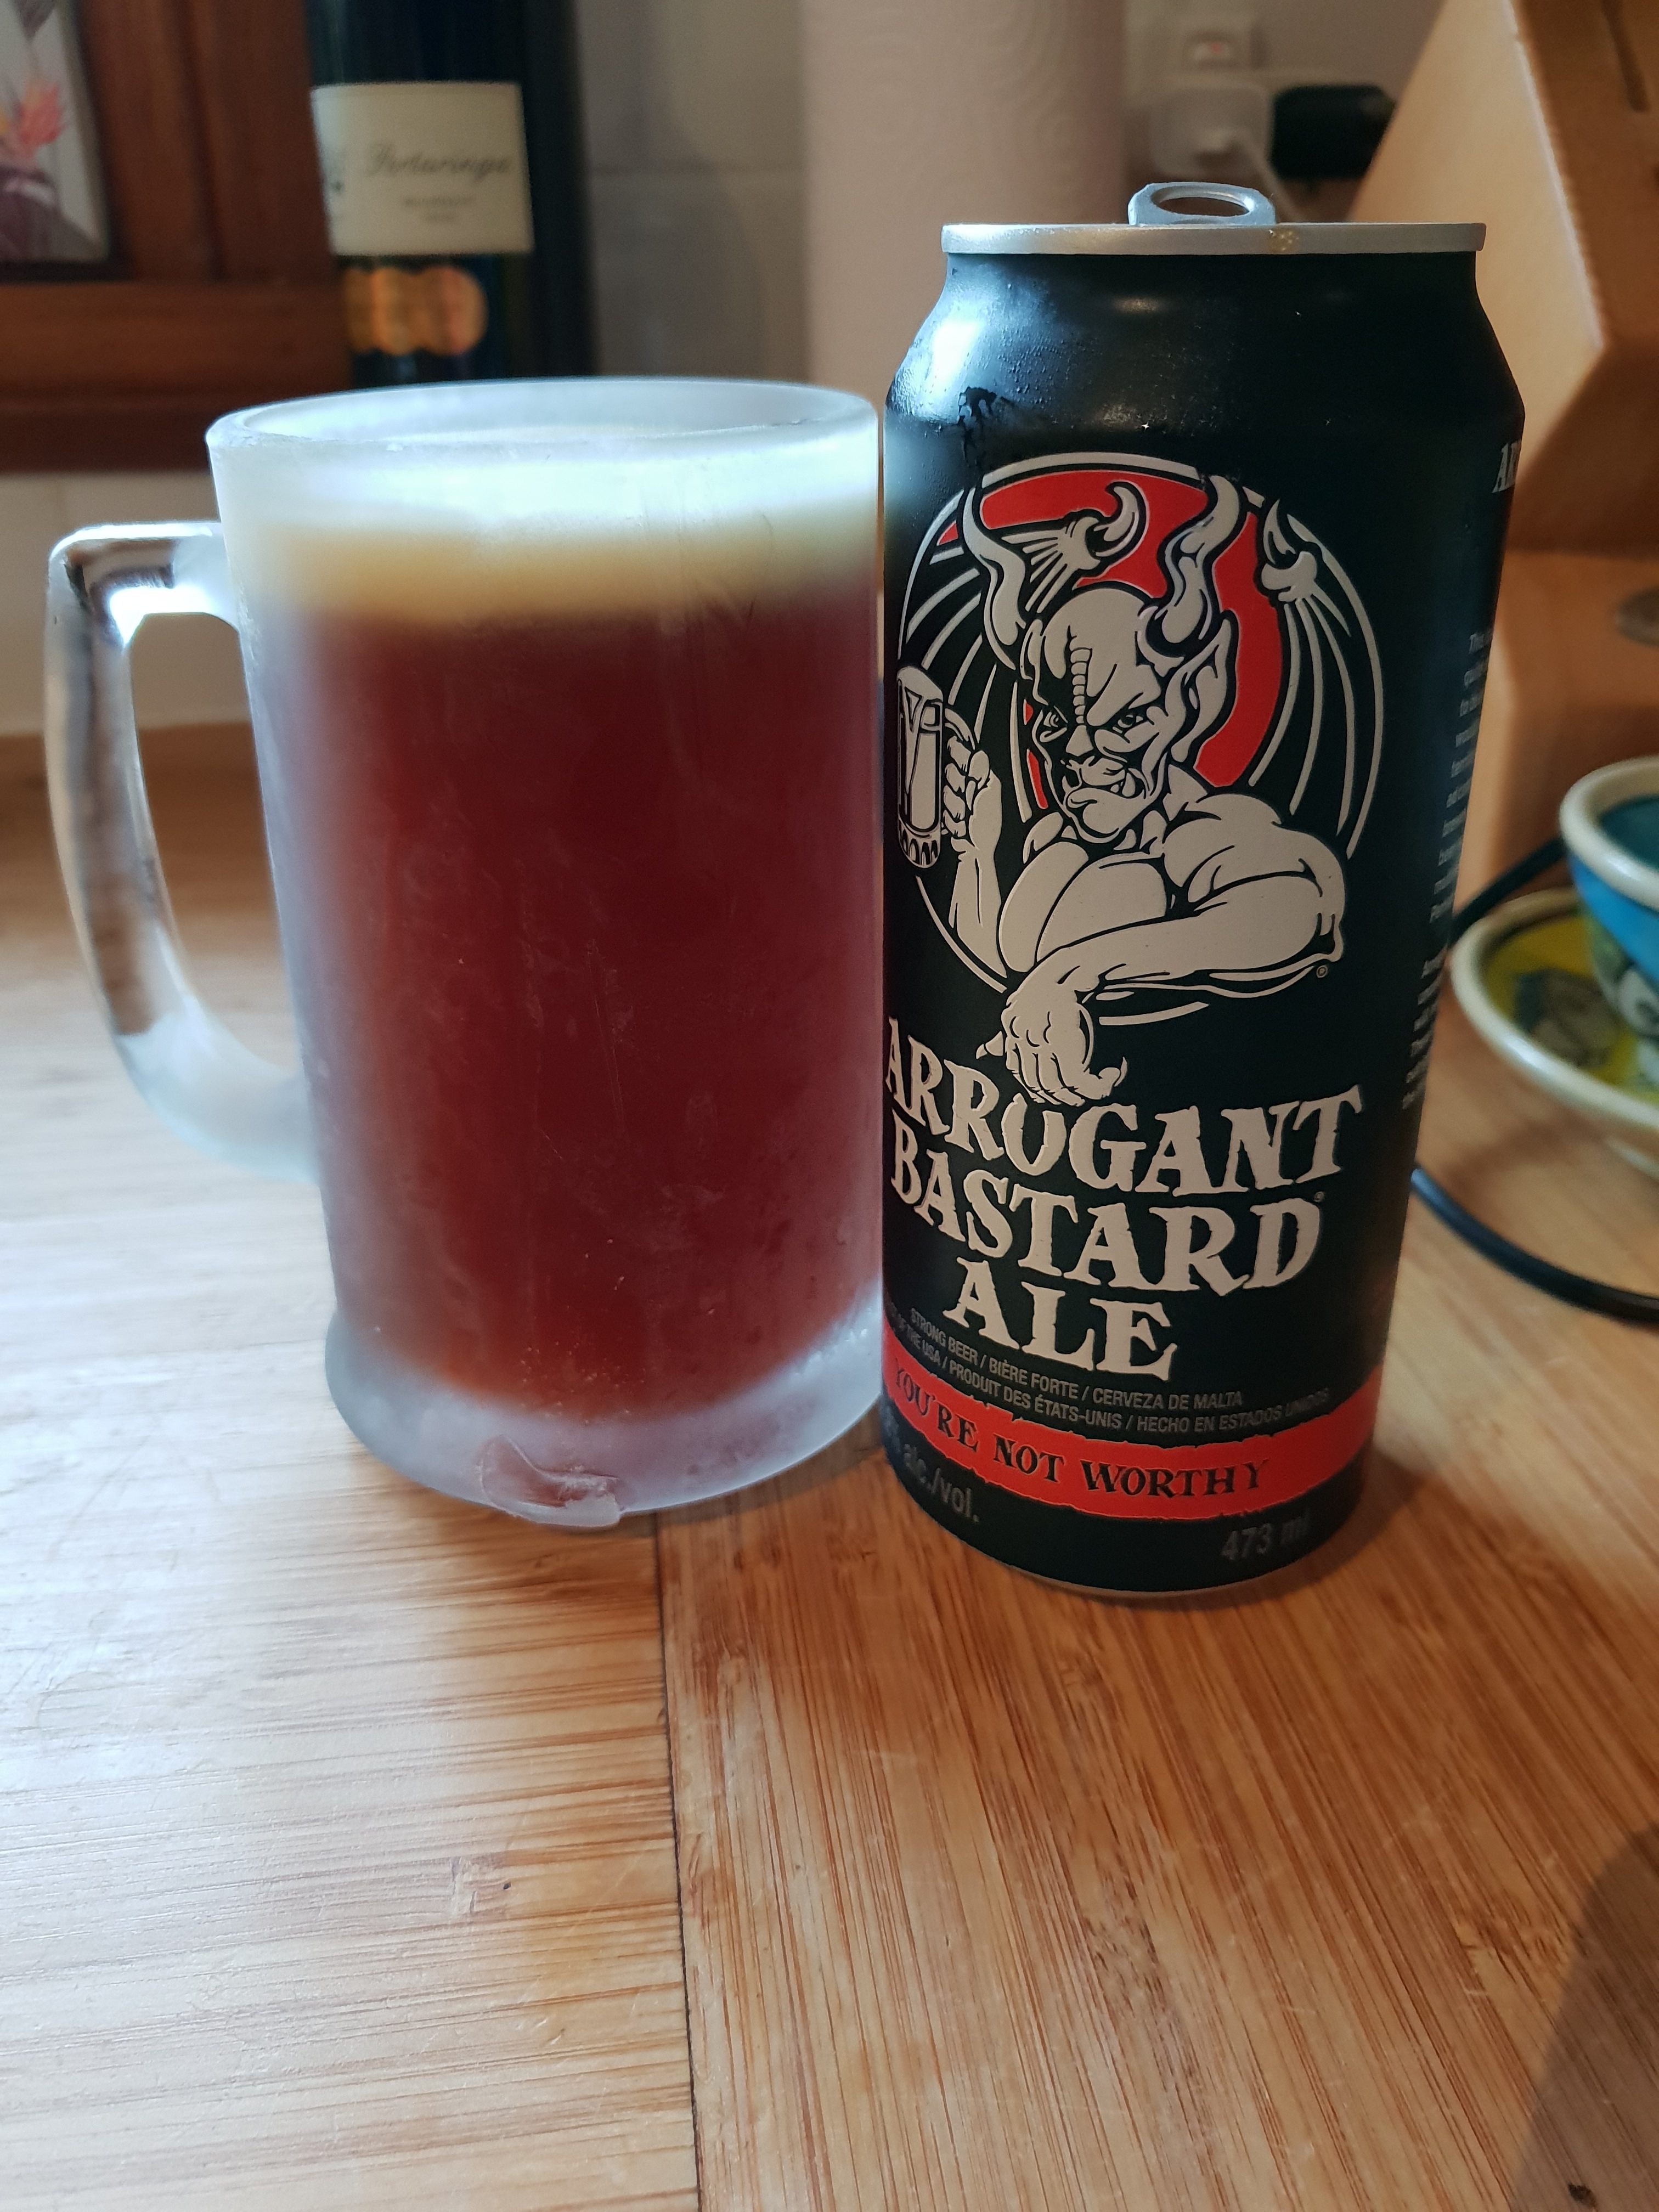 Arrogant Bastard Ale by Arrogant Consortia